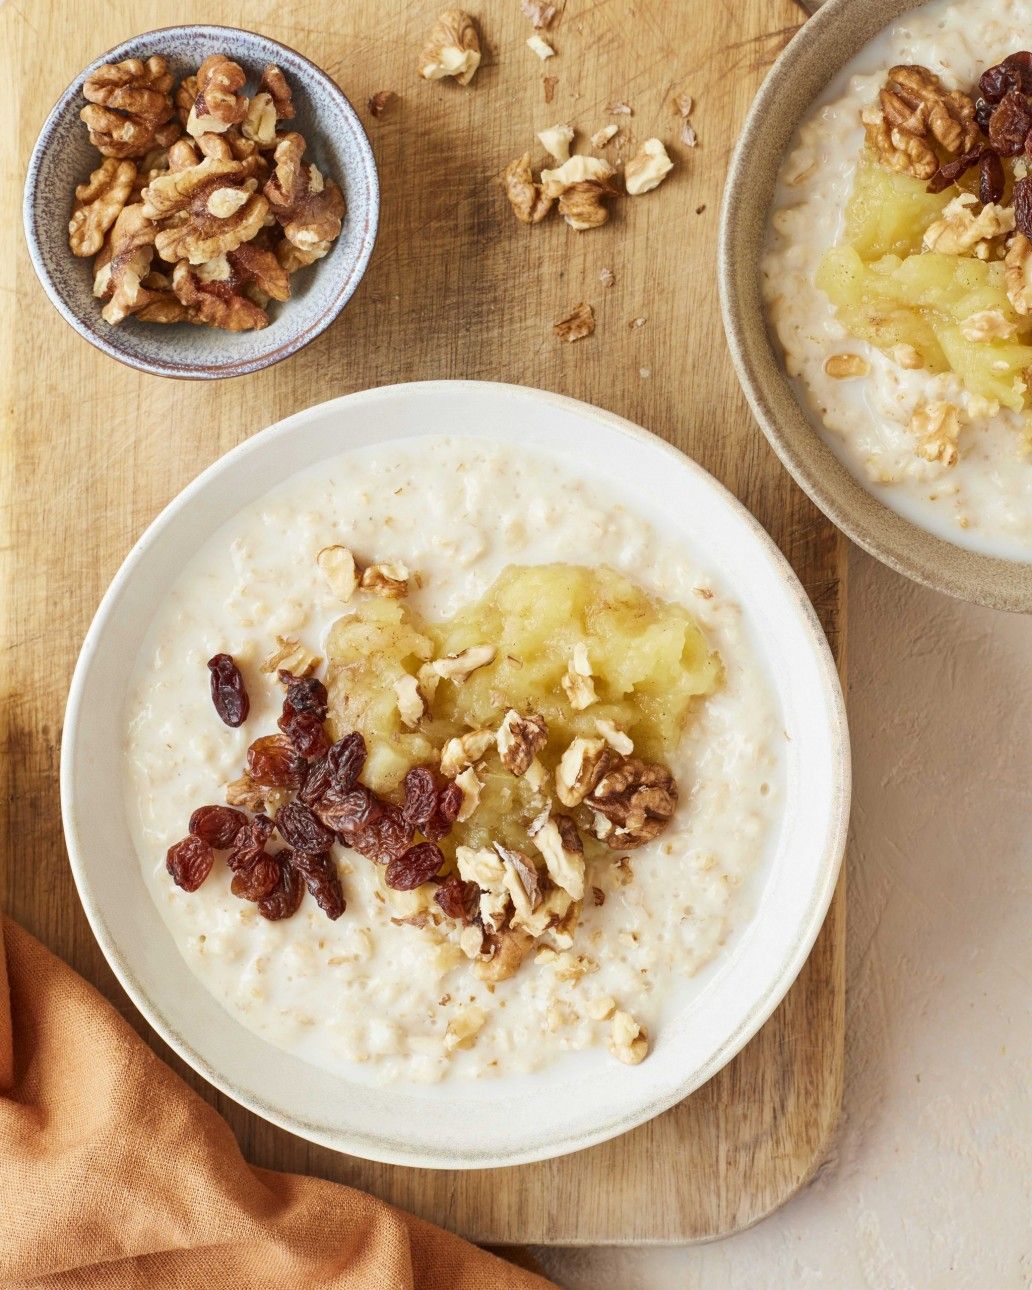 Amelia Freer's 10 recipes for nourishing your body this January - Porridge - Humphrey Munson 